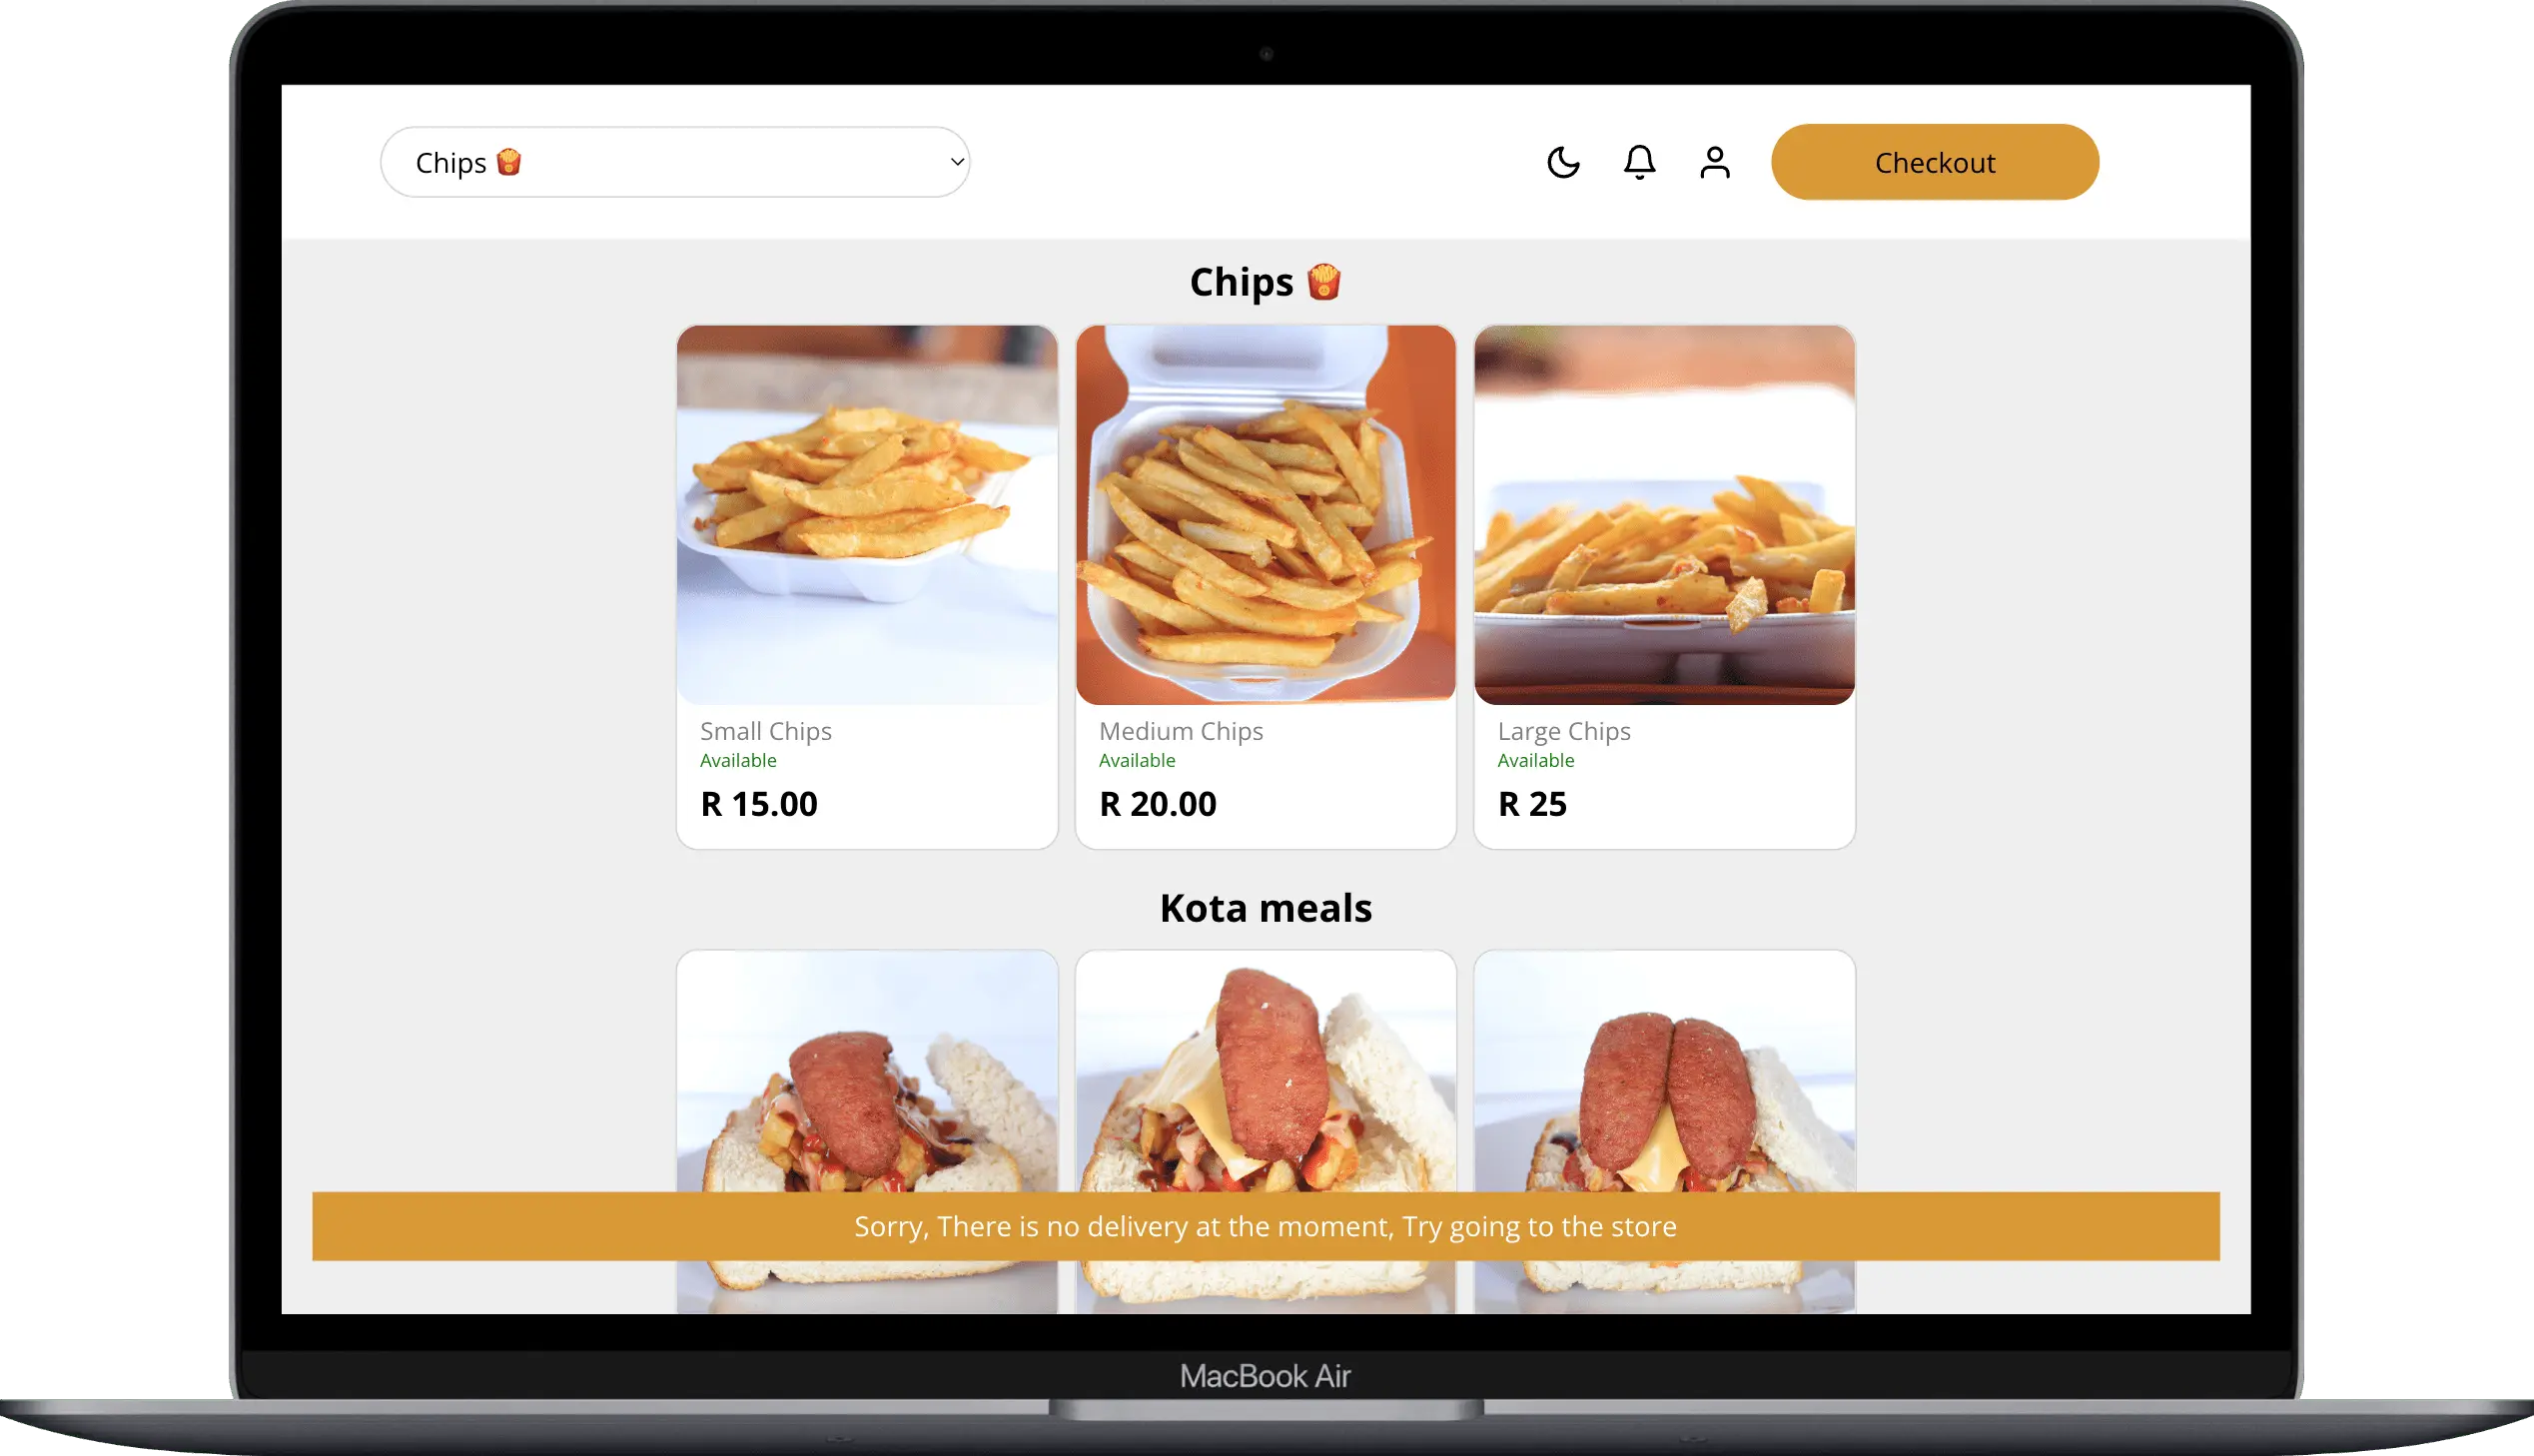 Food display, Add to cart, Food ordering, Order tracker